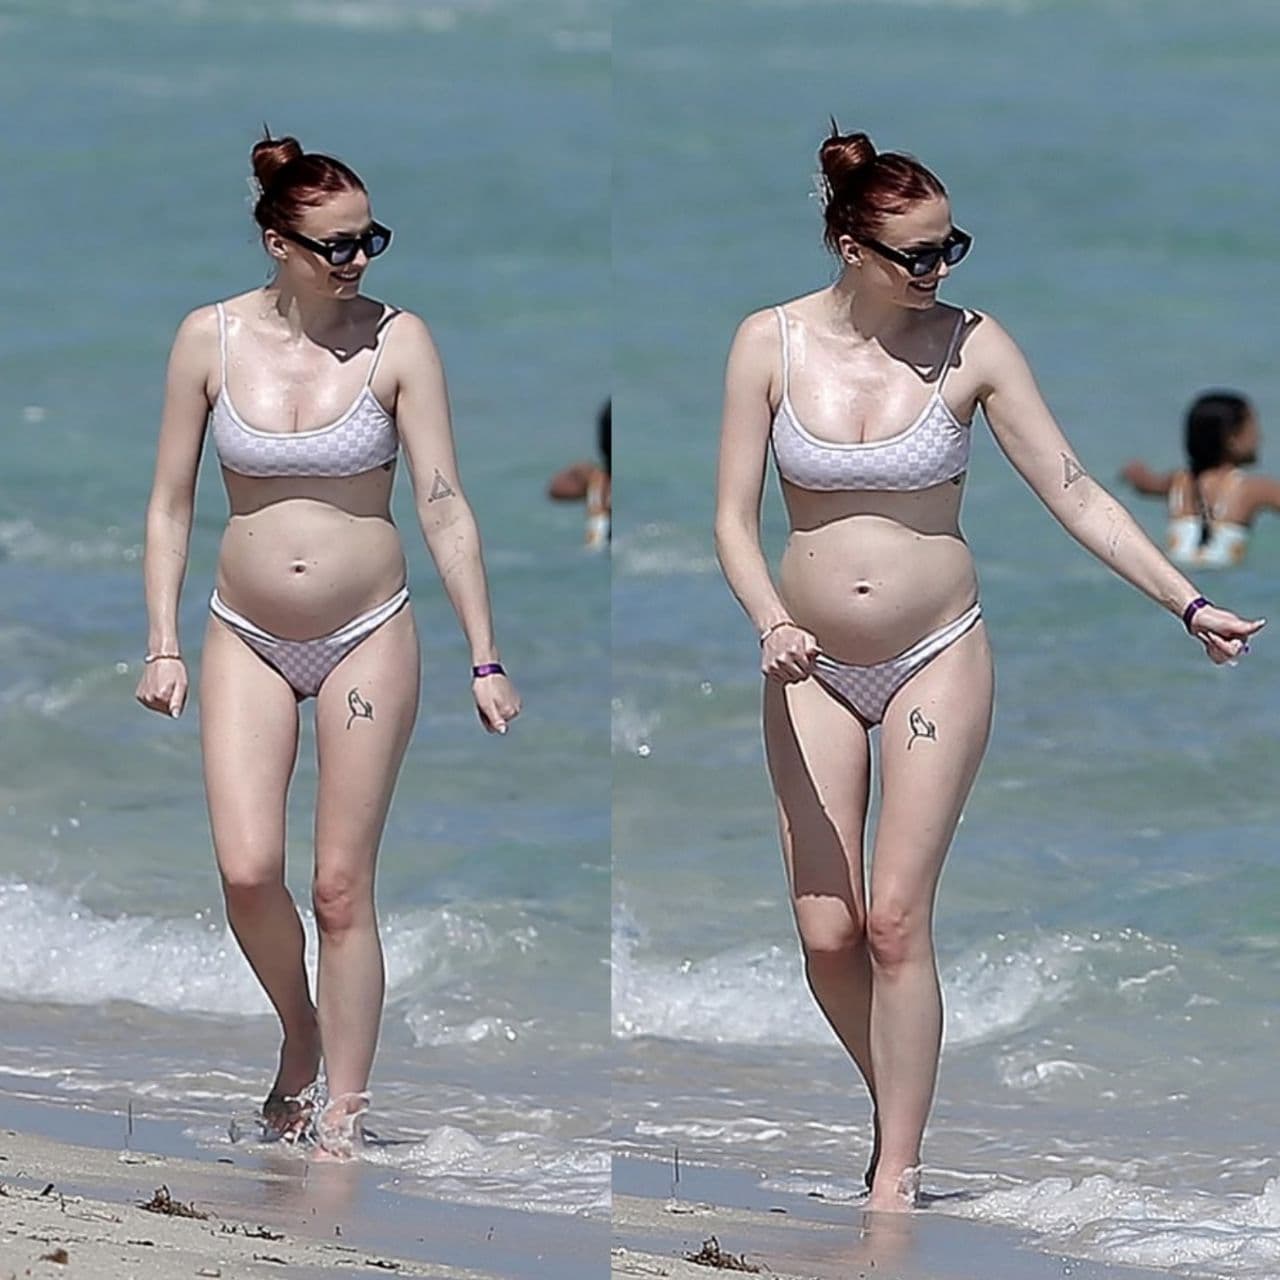 Citron Maleri aIDS CelebrityLifeNewsPhotos på Twitter: "Sophie Turner pancione e bikini  https://t.co/RPGQpNdZkv via @YouTube #sophieturner #miami #pregnant #bikini  #incinta #pancione #celebritylifenewsphotos https://t.co/8rcLD2JoCs" /  Twitter